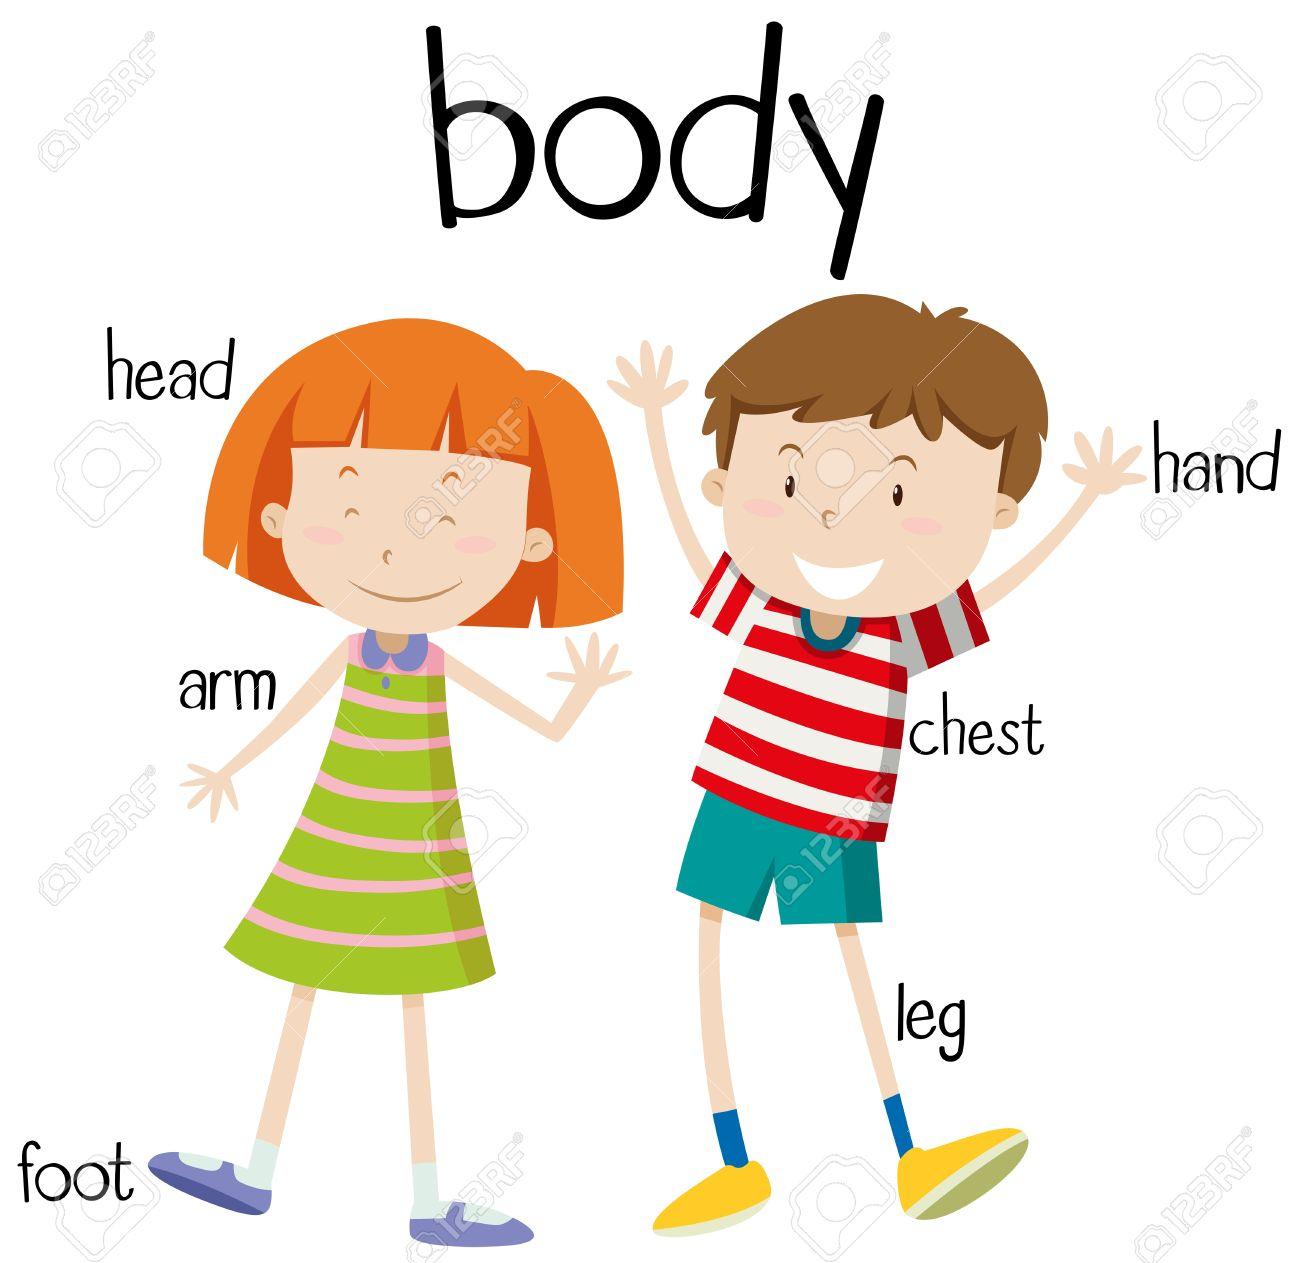 Clipart Of Human Body Part Human Body Parts Diagram